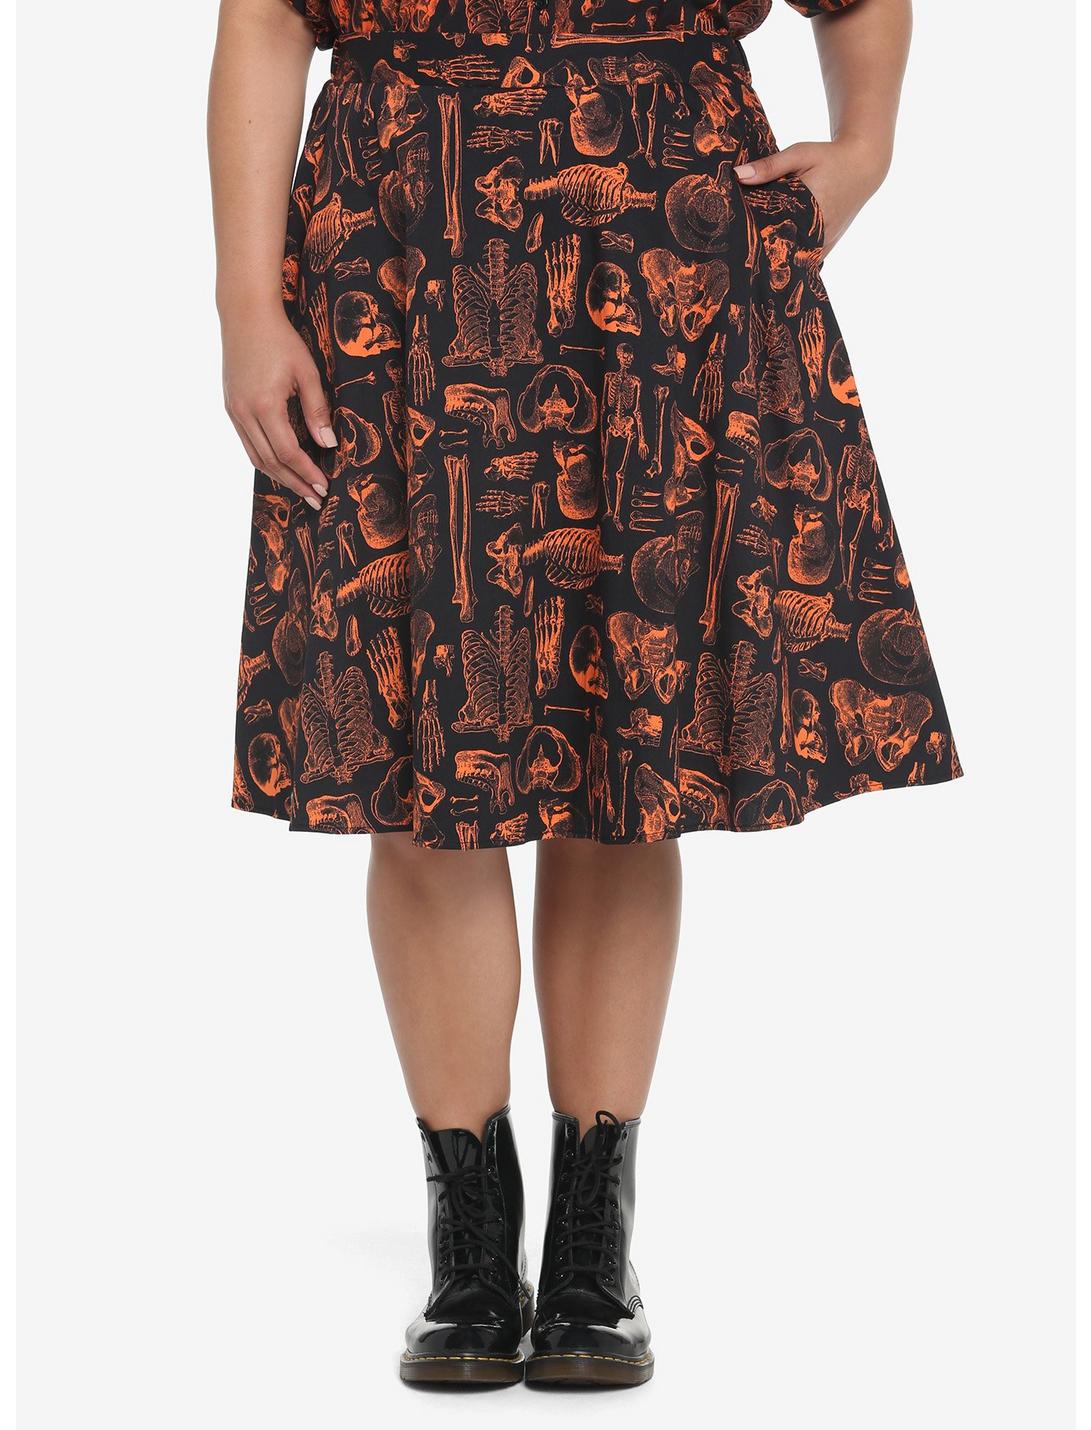 Black & Orange Skeleton Anatomy Retro Skirt Plus Size, MULTI, hi-res